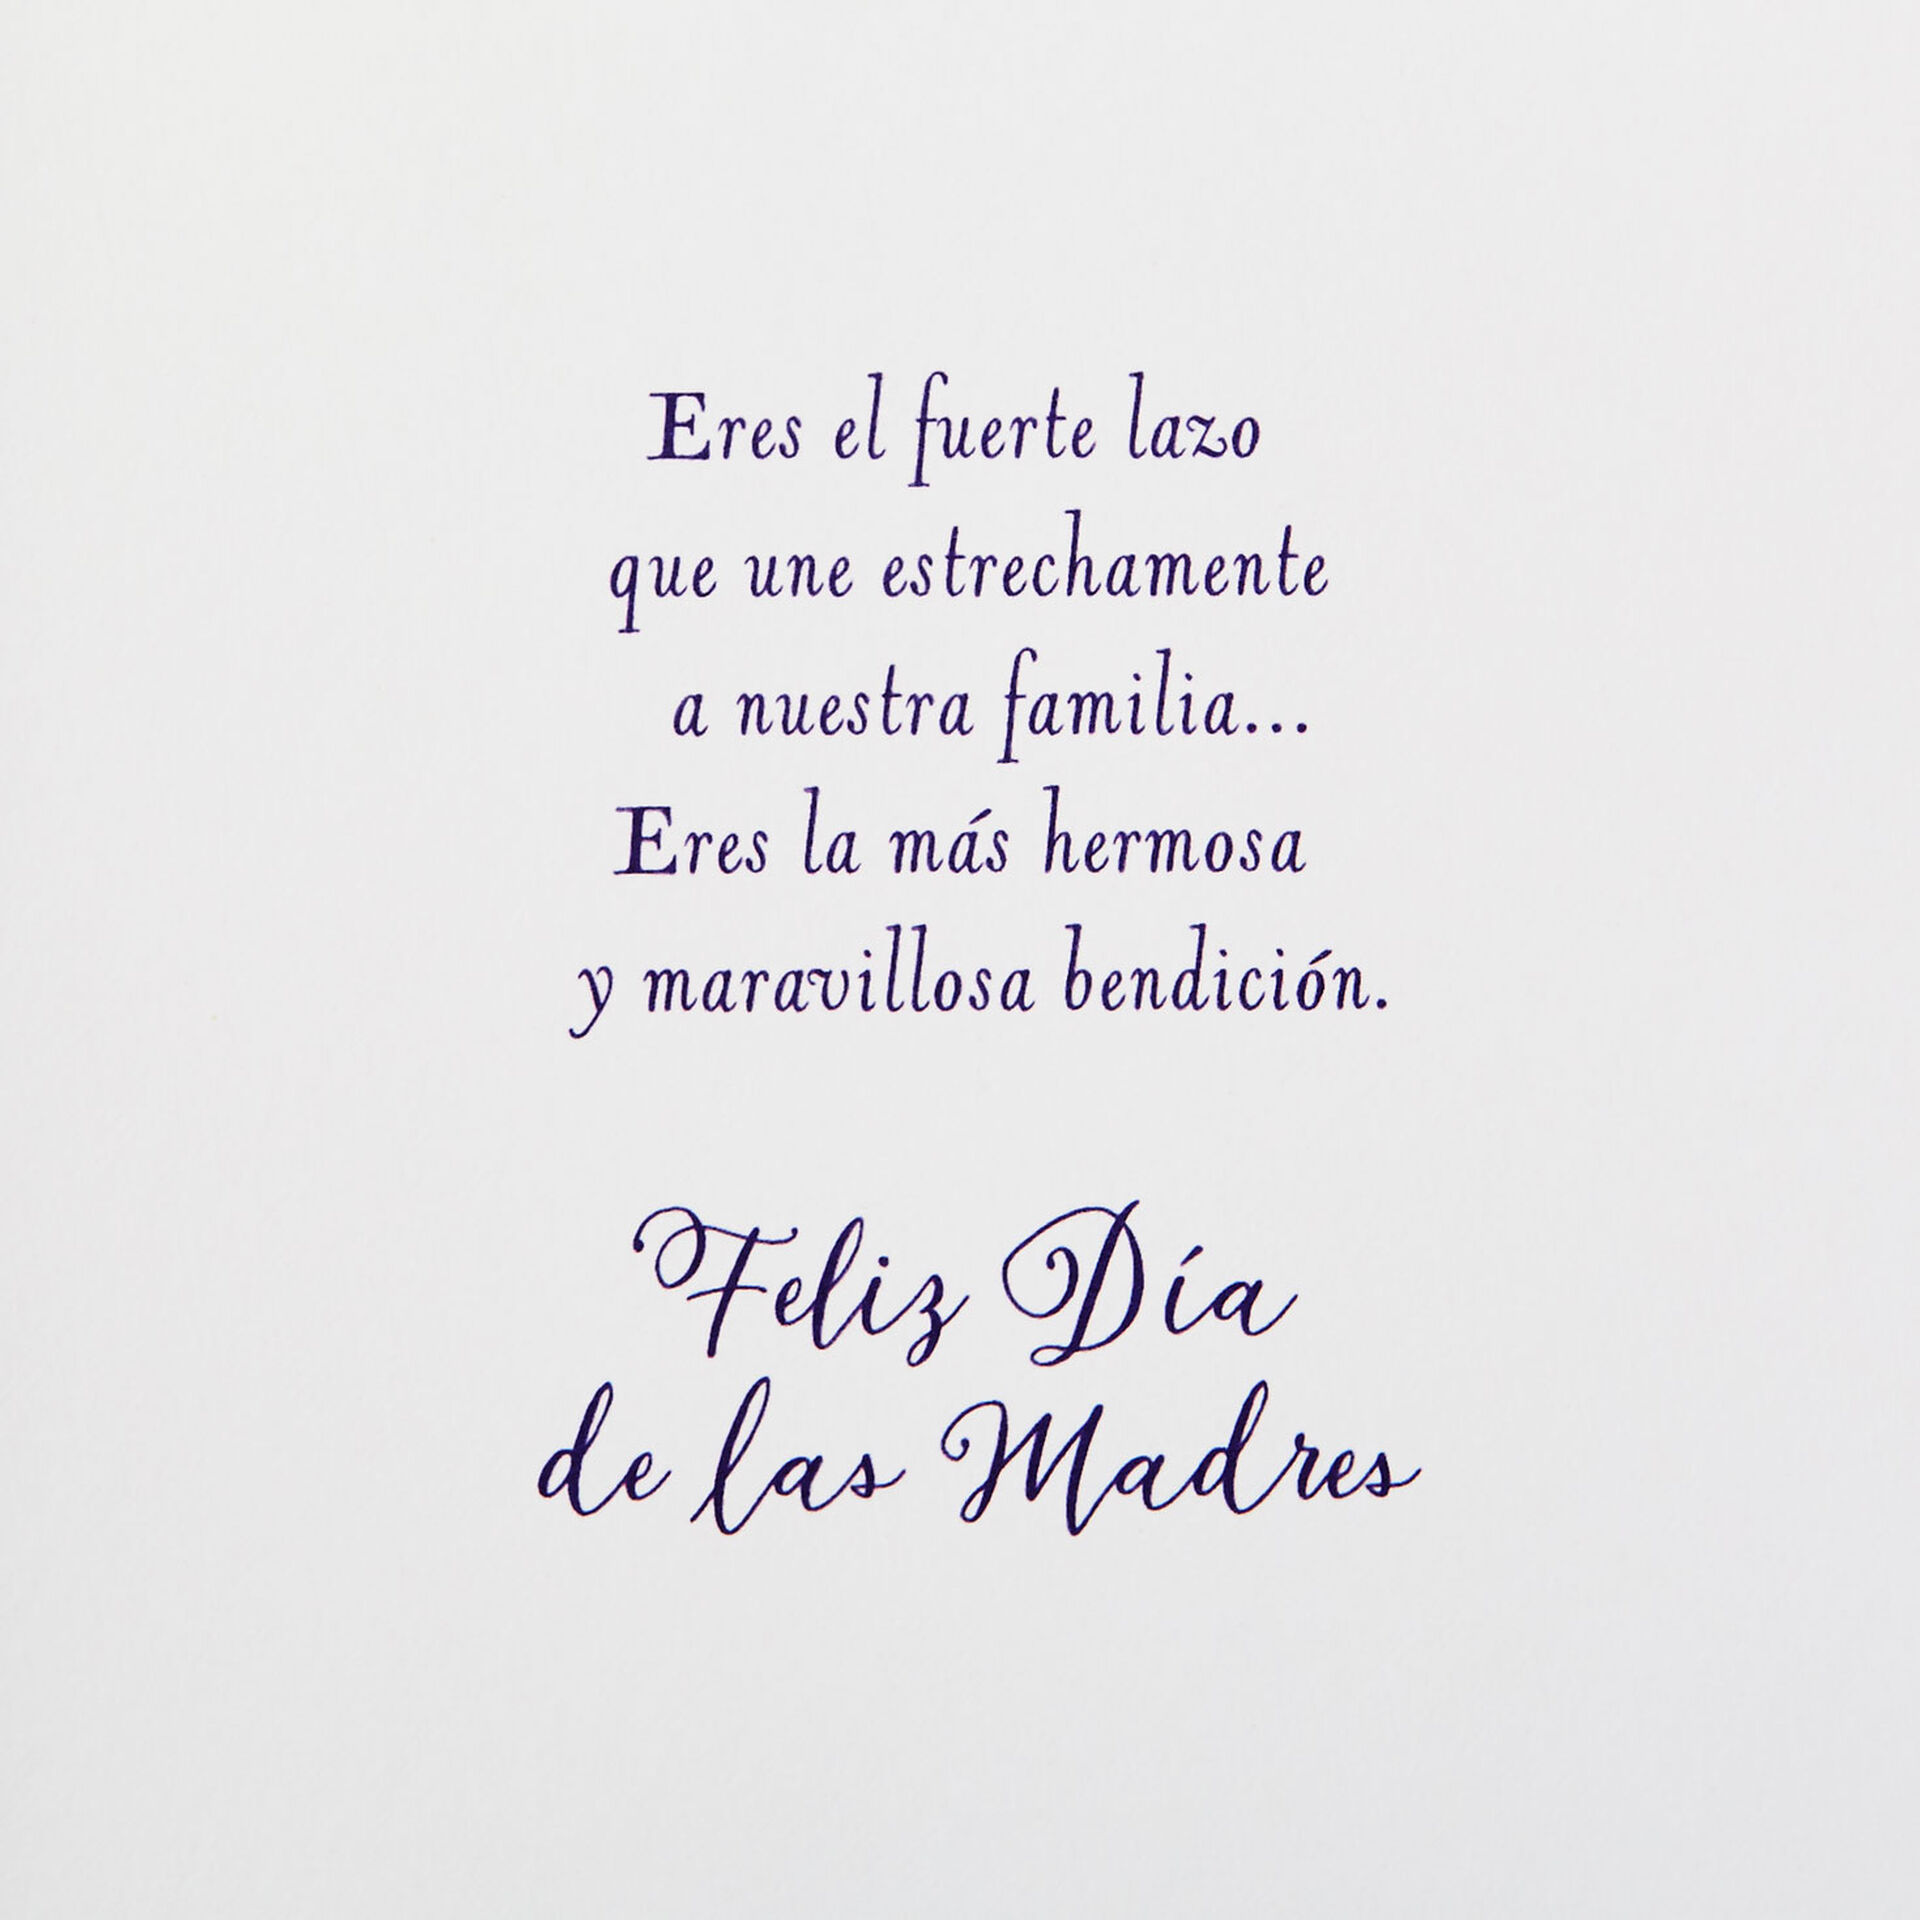 birdhouses-spanish-language-mother-s-day-card-for-grandma-greeting